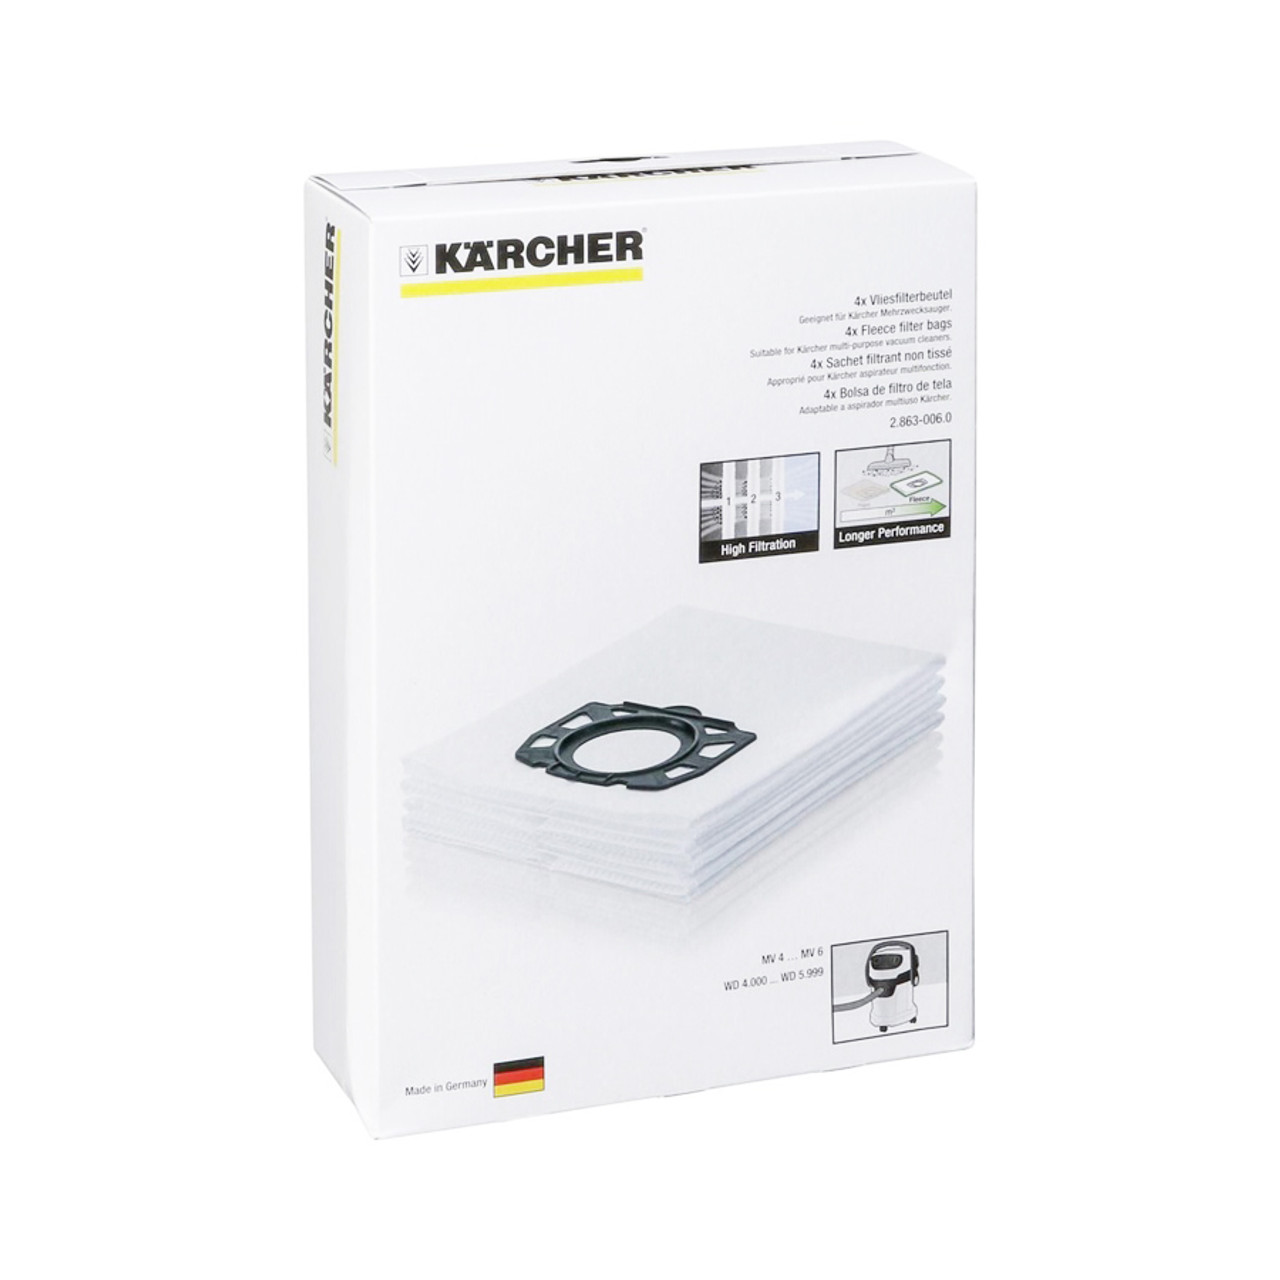 Karcher Fleece Filter Bags KFI 487 2863-0060 (WD 4 to WD 5)